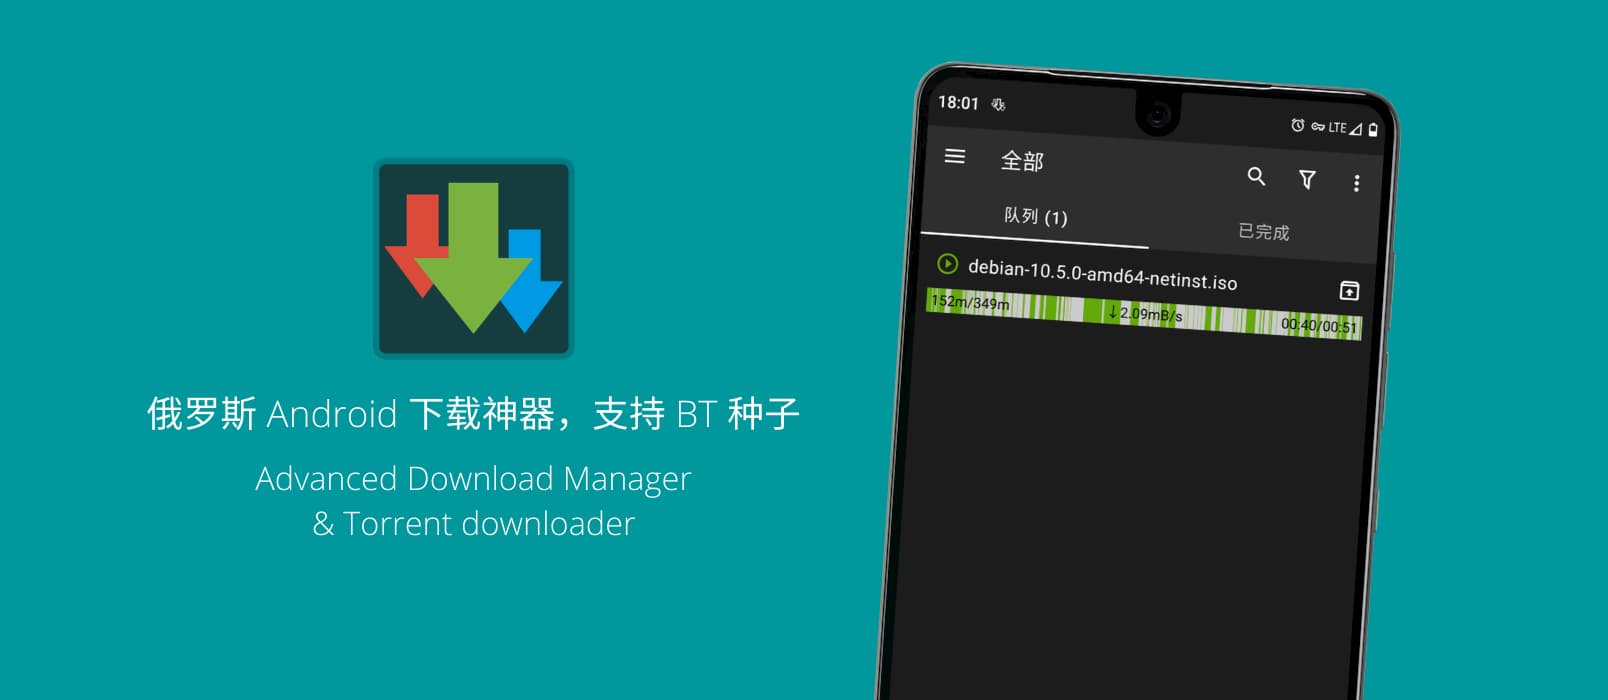 Advanced Download Manager(ADM) - 来自俄罗斯的 Android 下载神器，支持下载 BT 种子 1